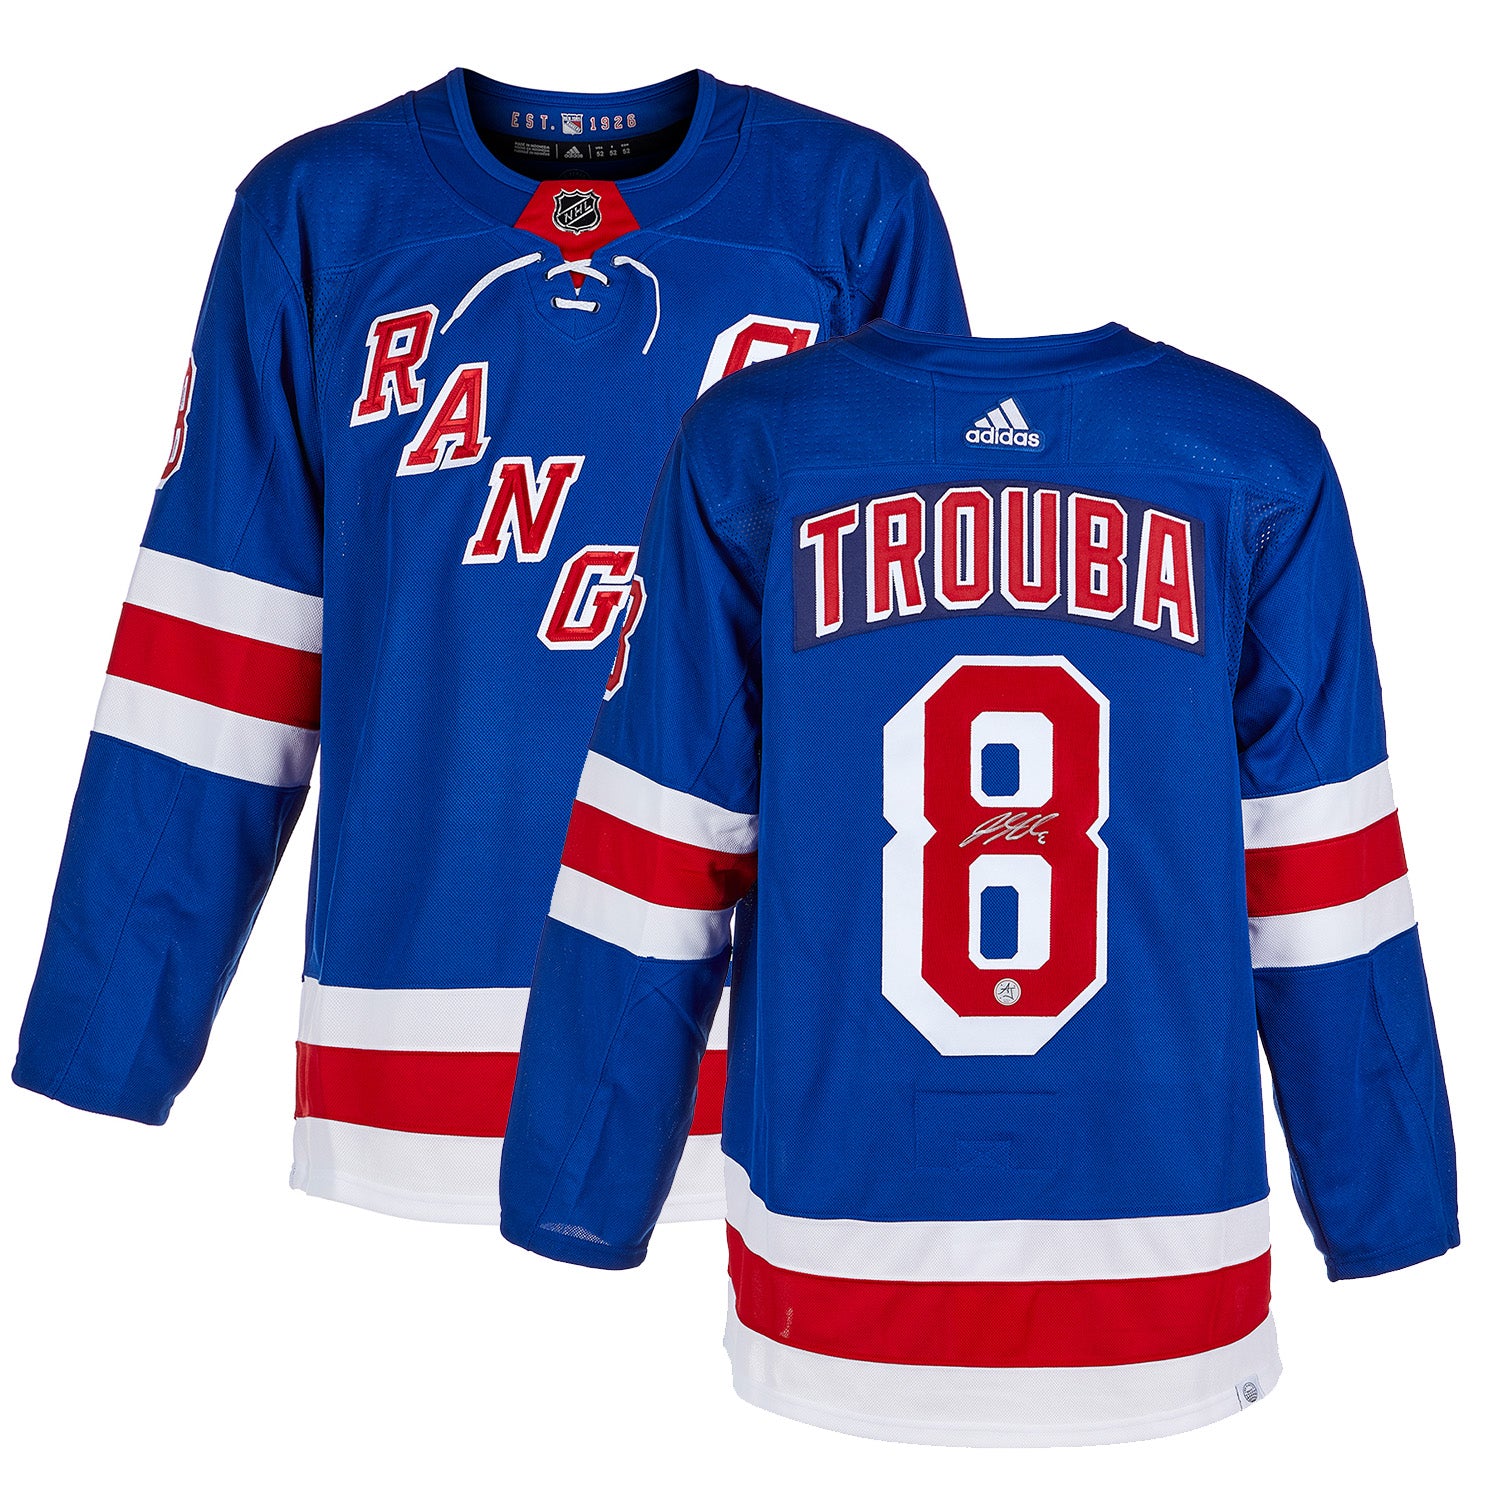 Jacob Trouba New York Rangers Autographed Adidas Jersey